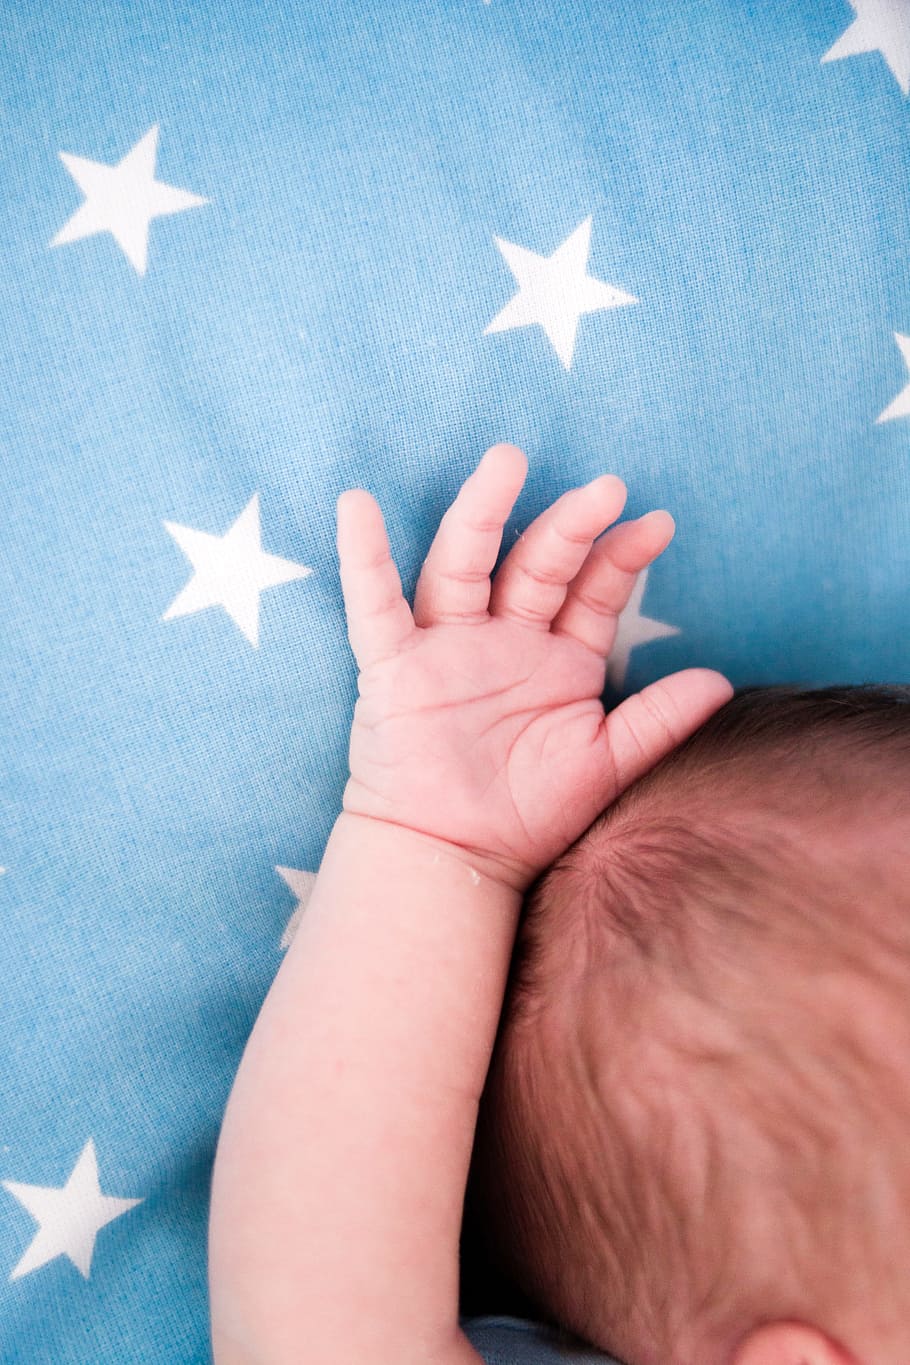 small, baby, hand, blue, stars, fingers, newborn, family, star shape, human hand